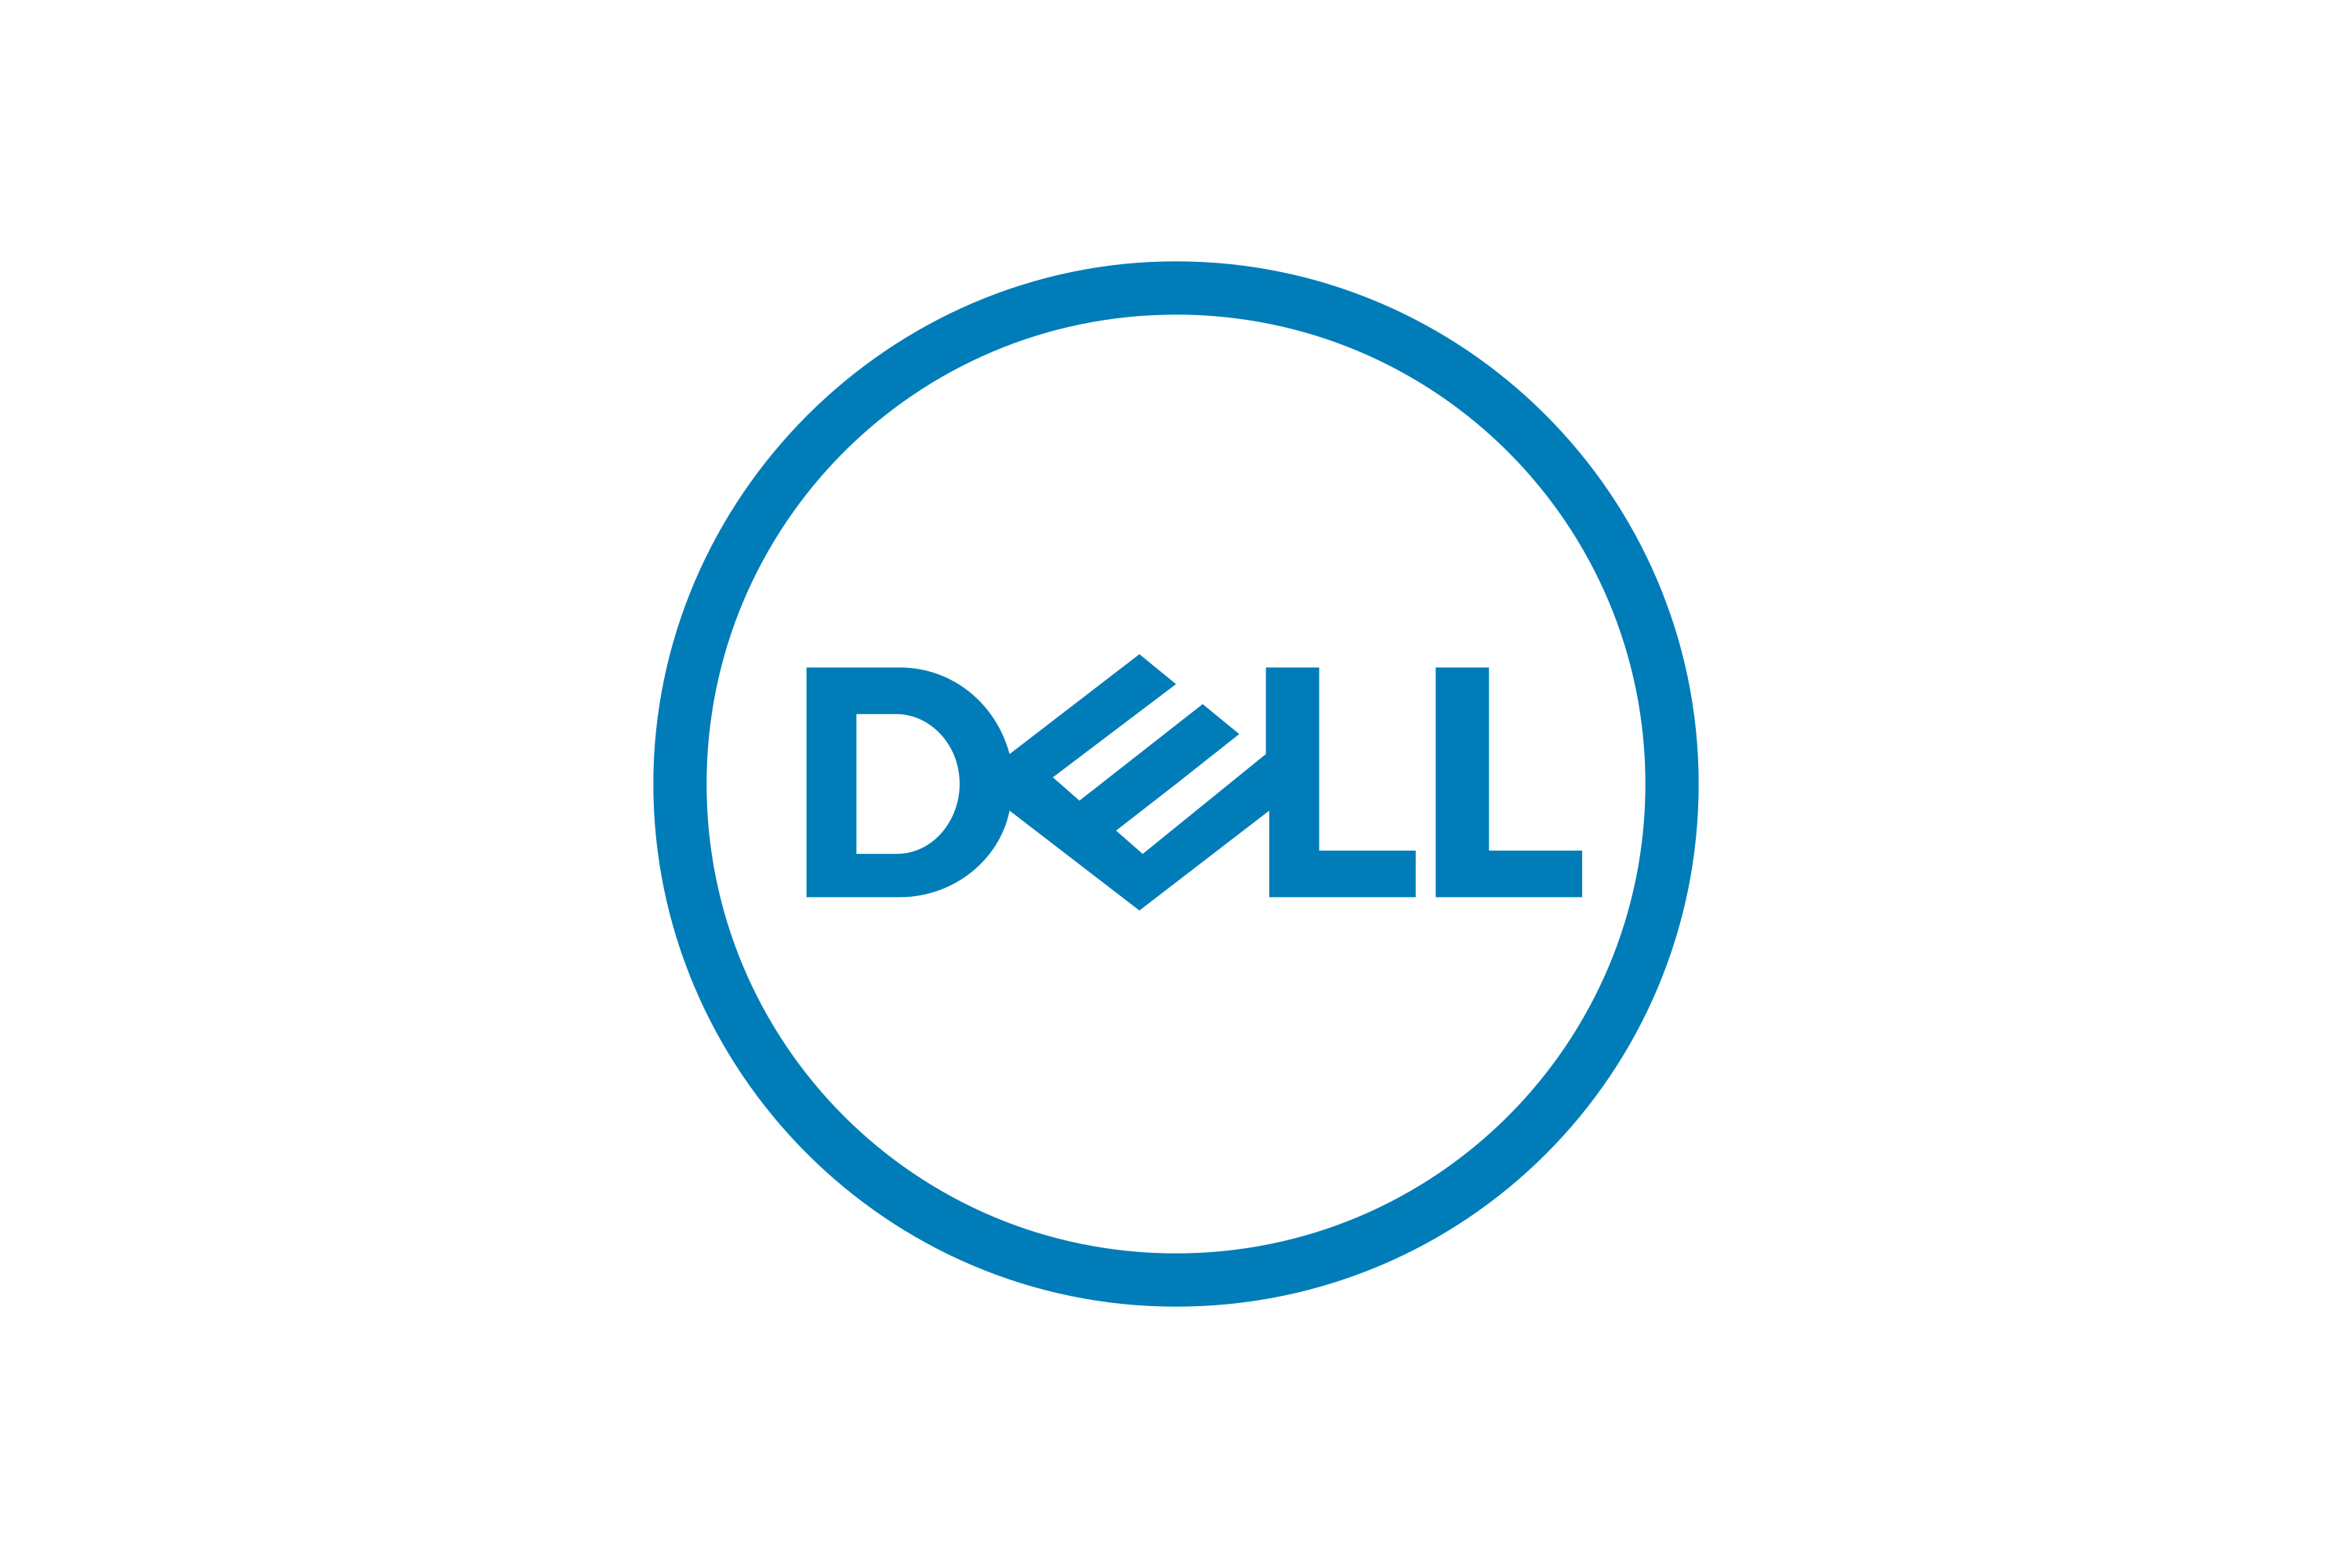 Download Dell Inc. Logo in SVG Vector or PNG File Format - Logo.wine